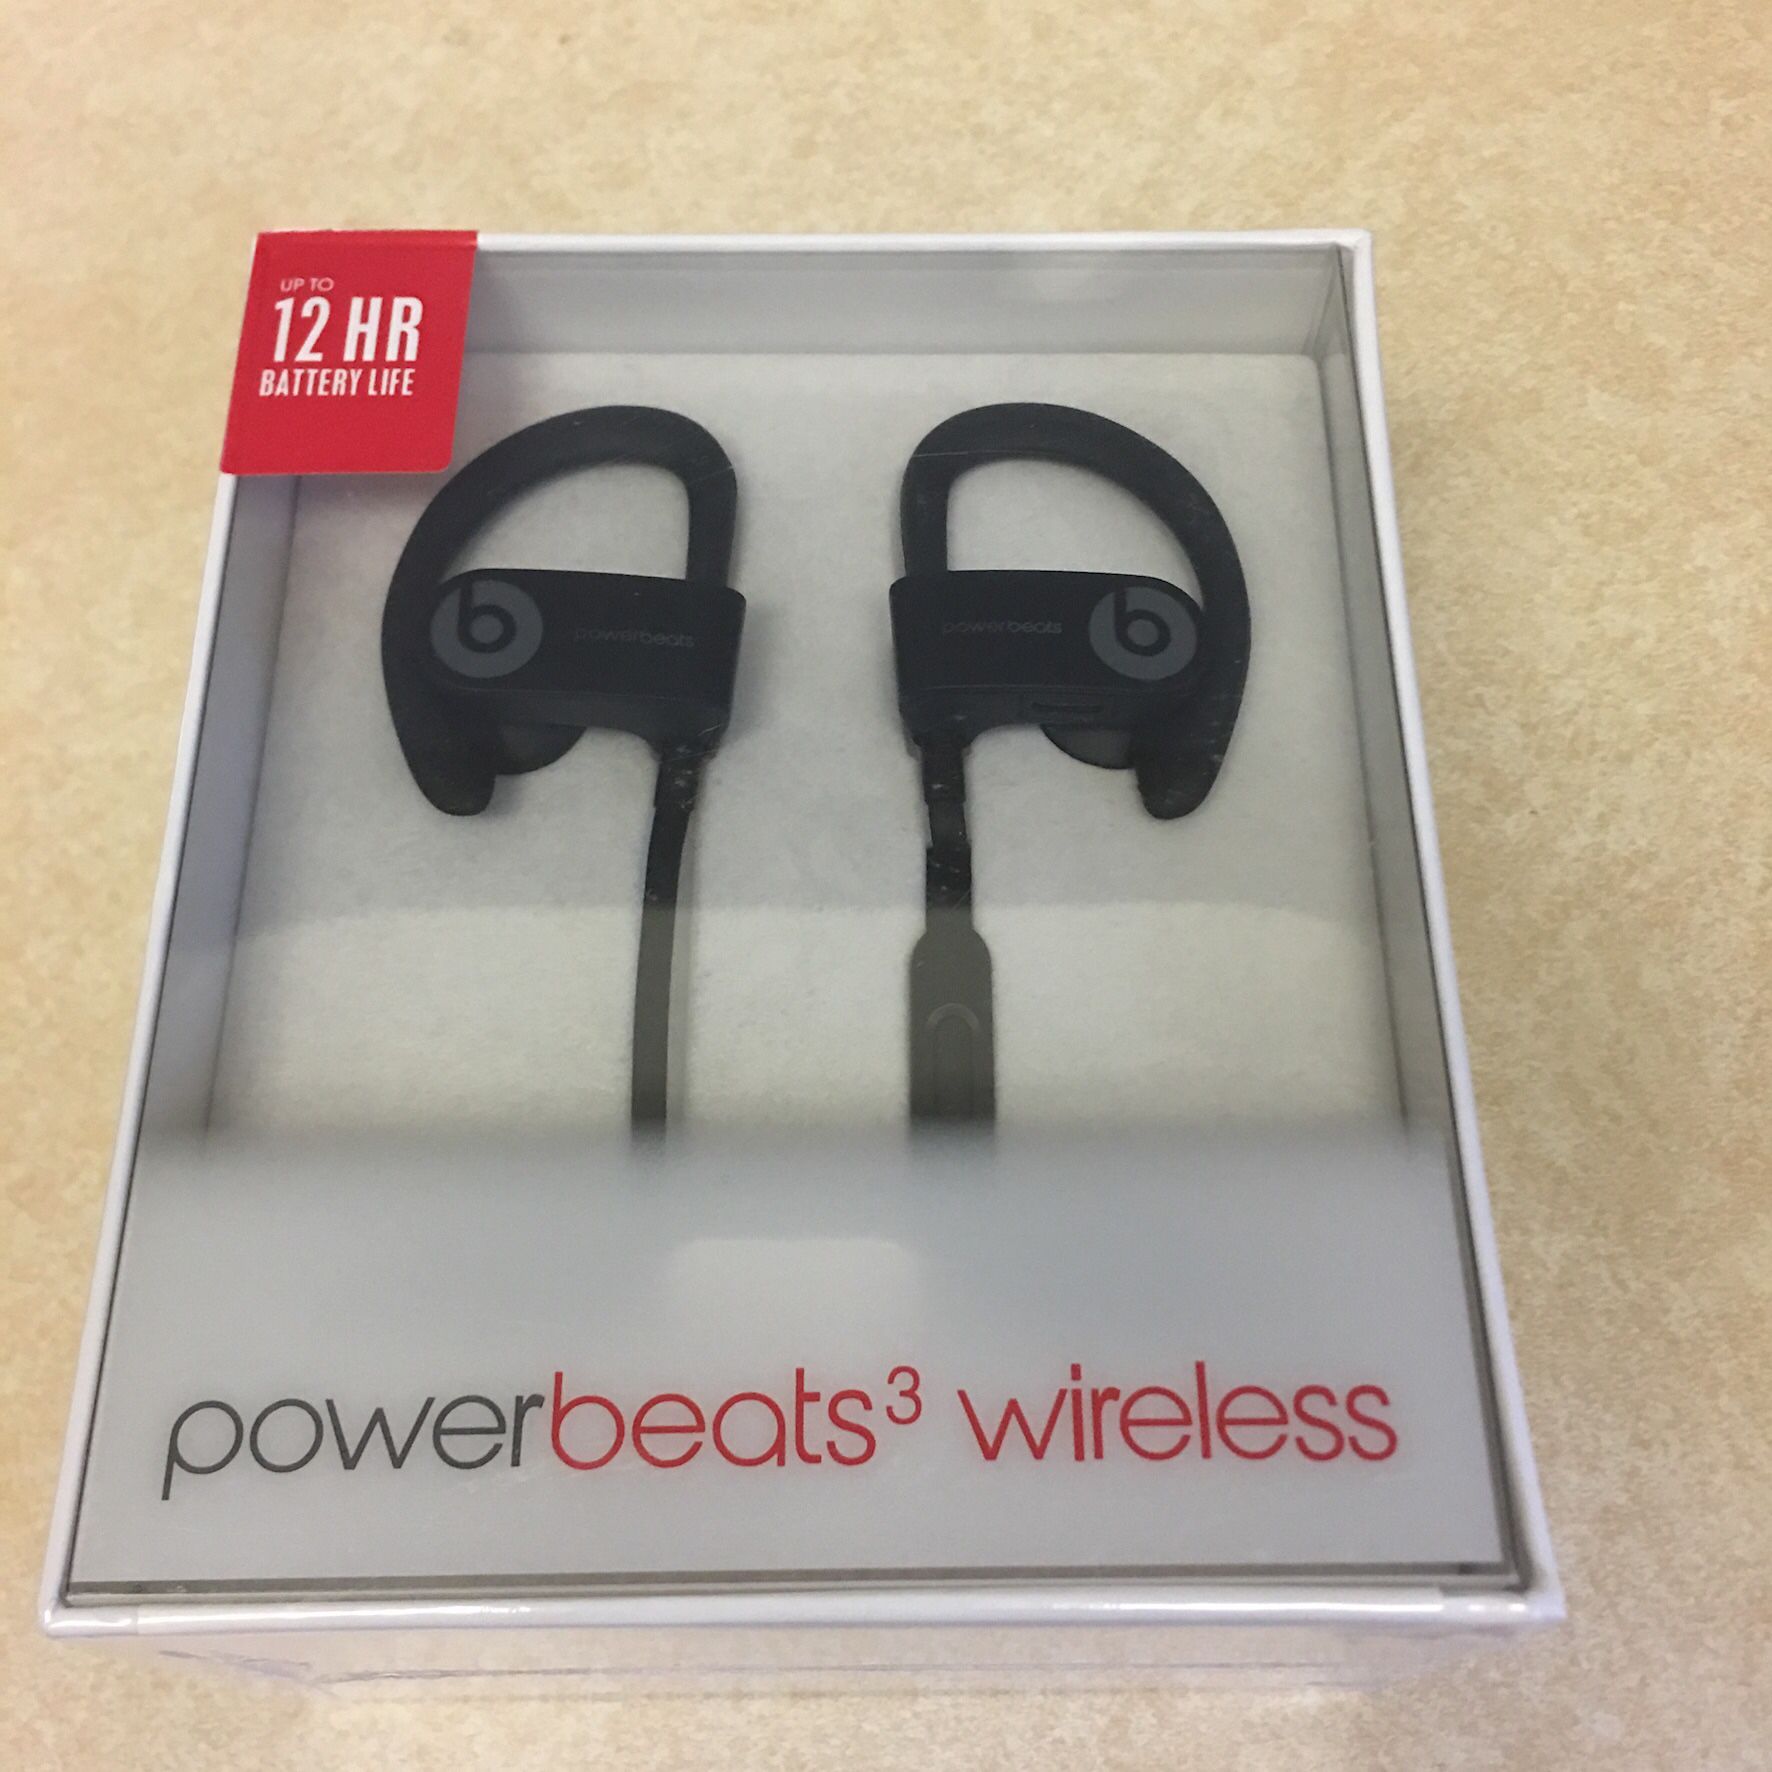 Beats by Dre Powerbeats 3.0 Wireless Bluetooth Headphones